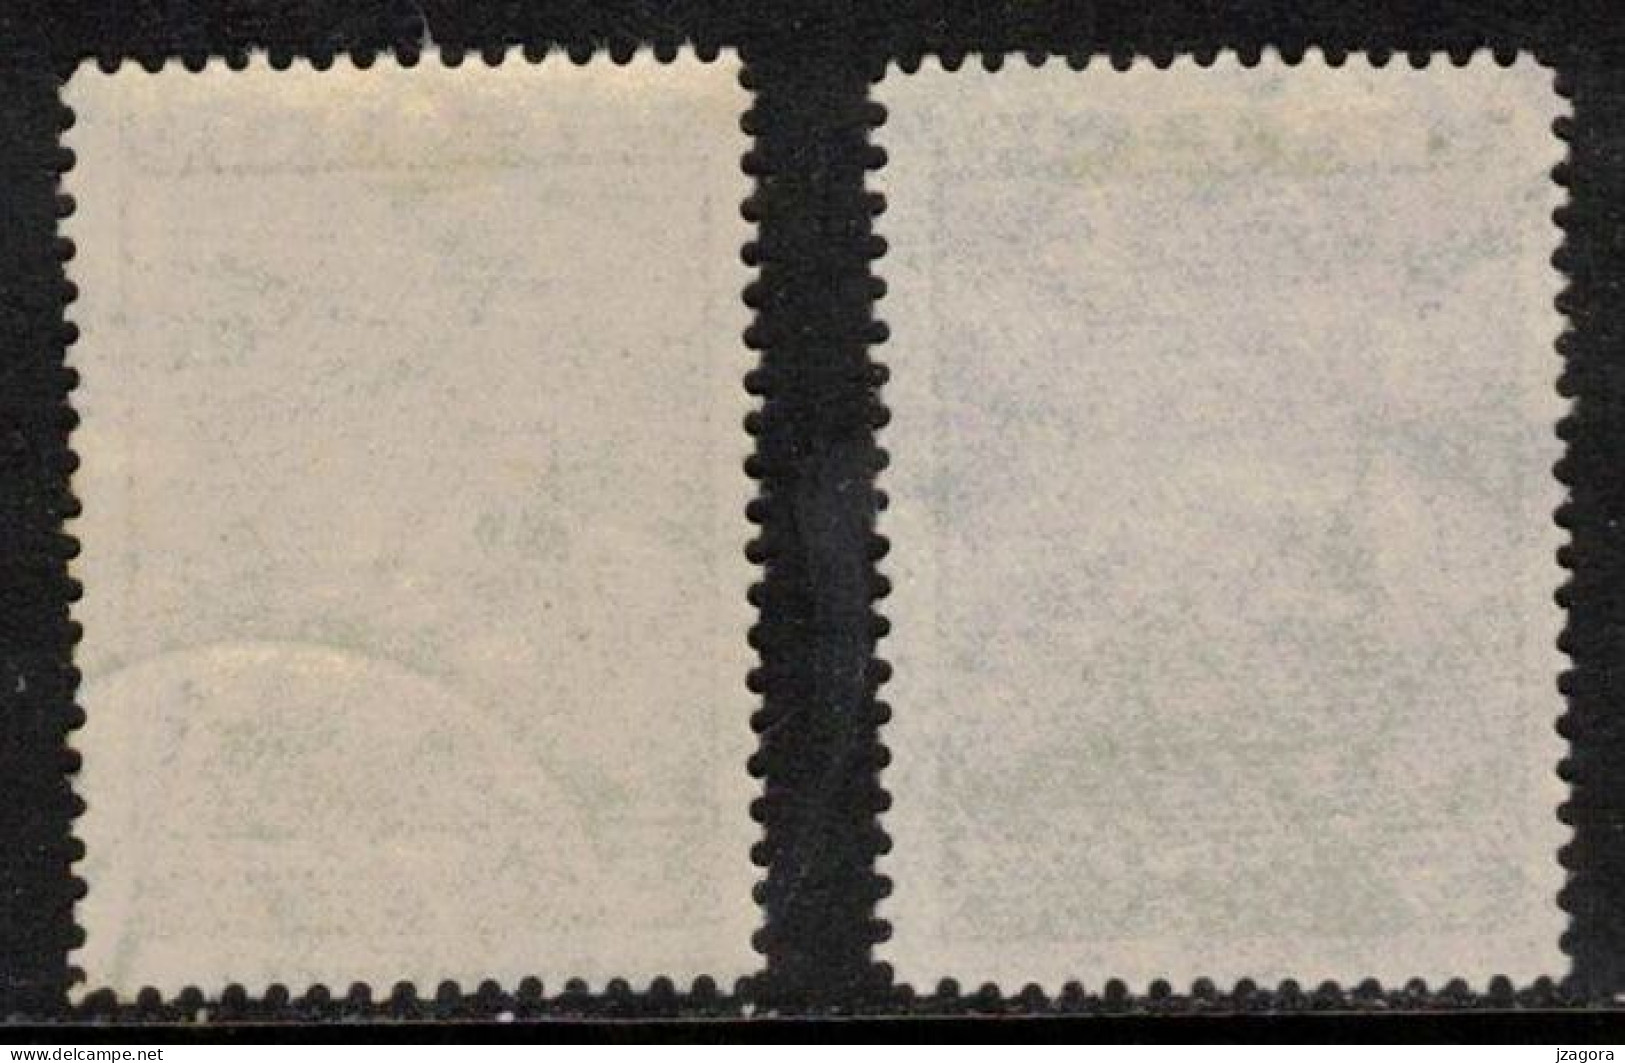 AUSTRIA ÖSTERREICH AUTRICHE 1935 Mi 598 Sc C32  FLUGPOST Air Mail Correo Aéreo Poste Aérienne (LIGHETR % DARKER VIOLET) - Used Stamps